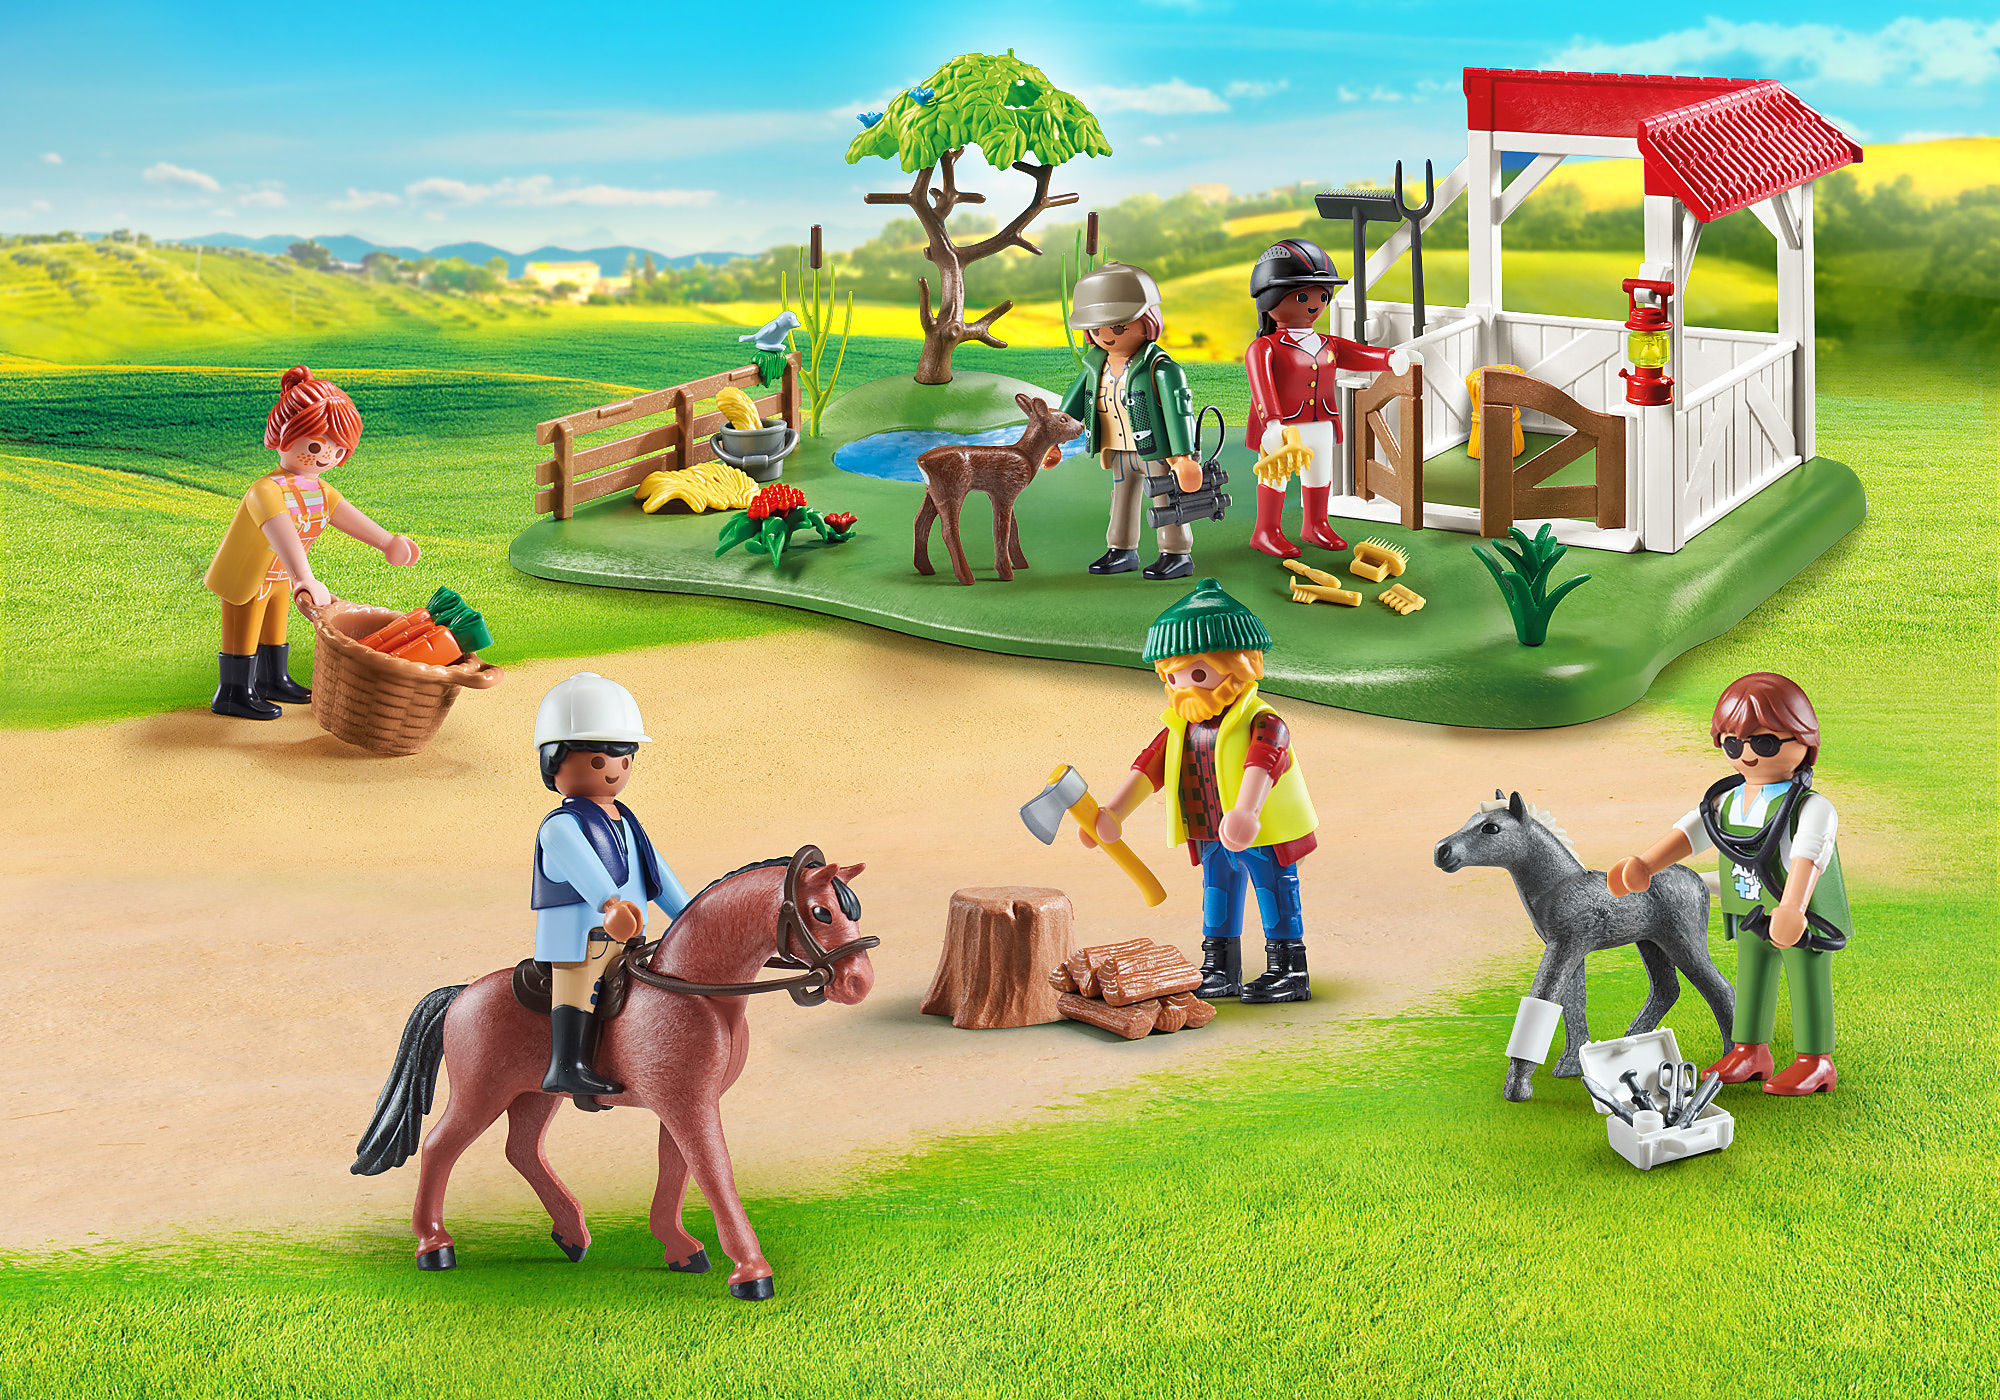 Playmobil Country Farm Shop - Imagination Toys